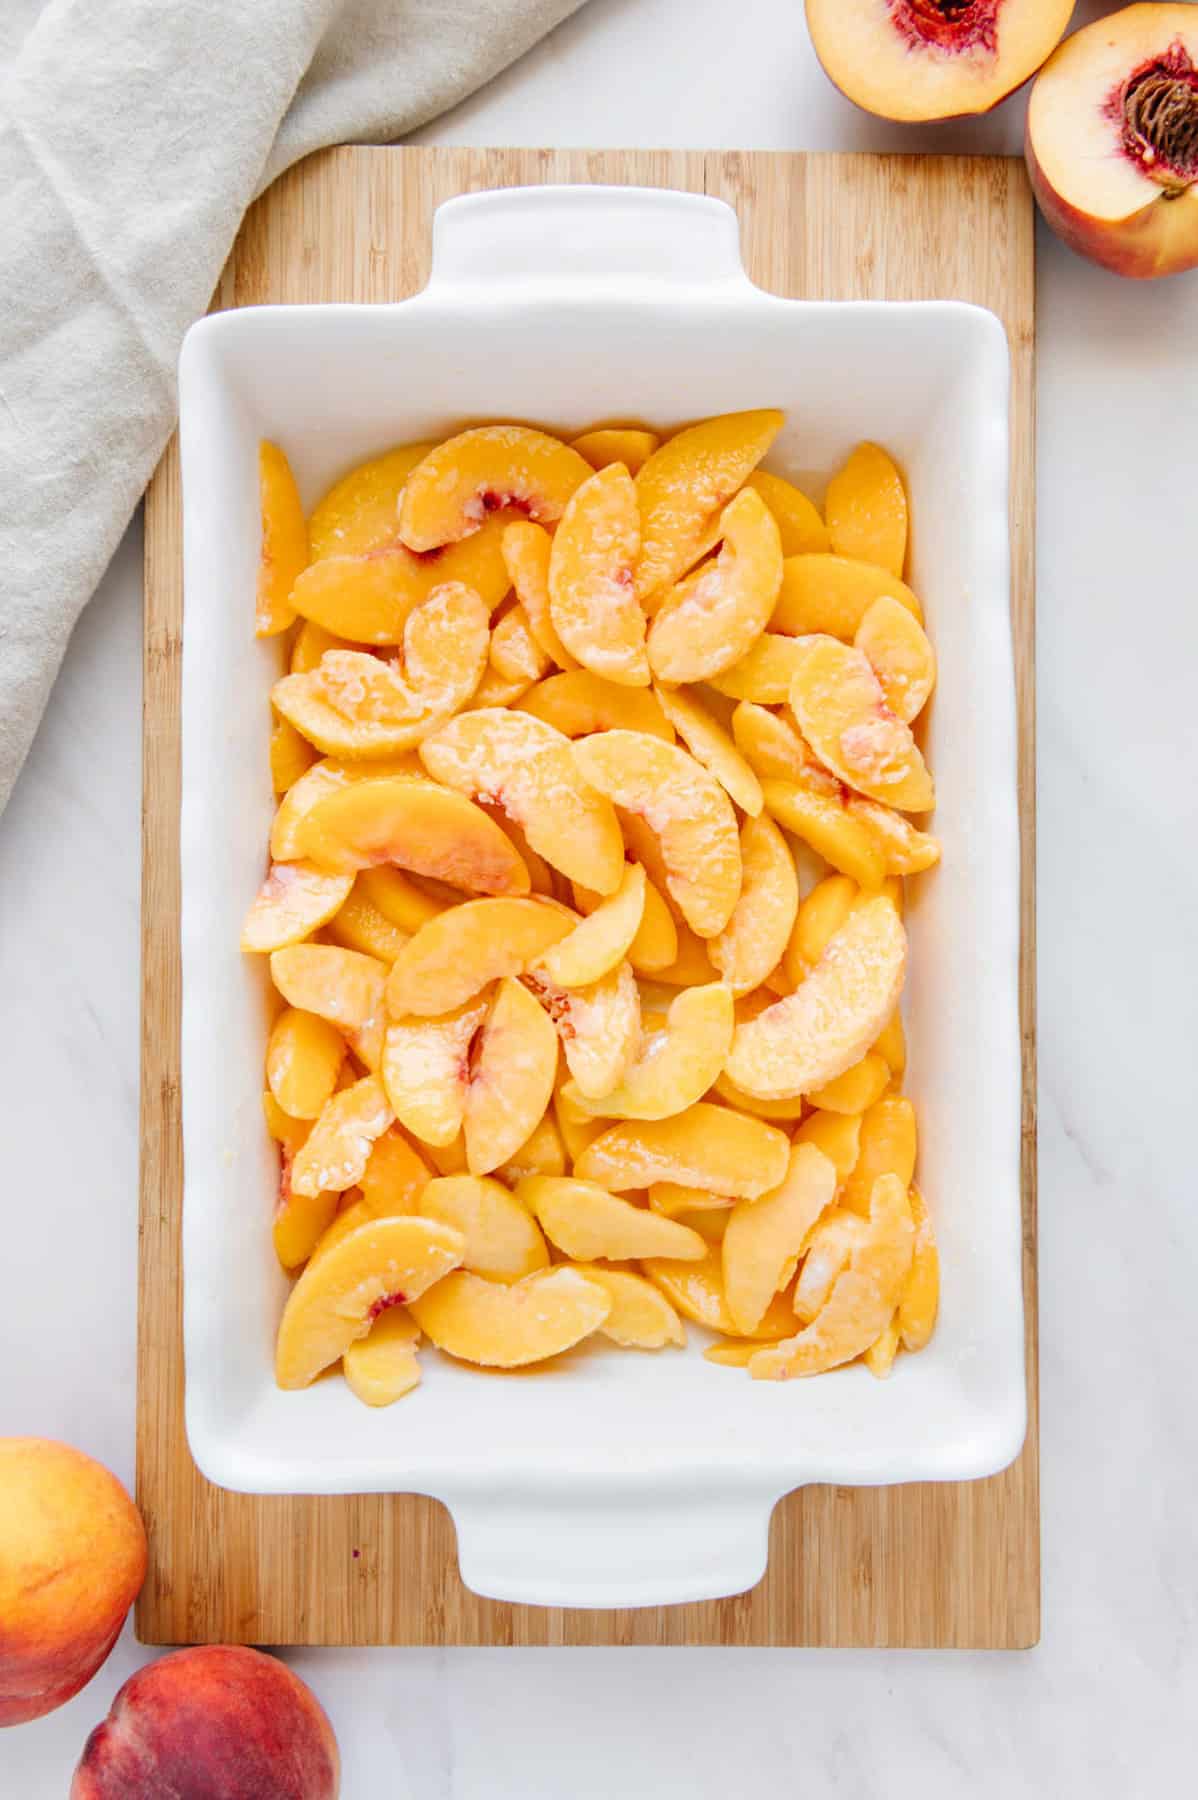 Frozen peaches in a dish.